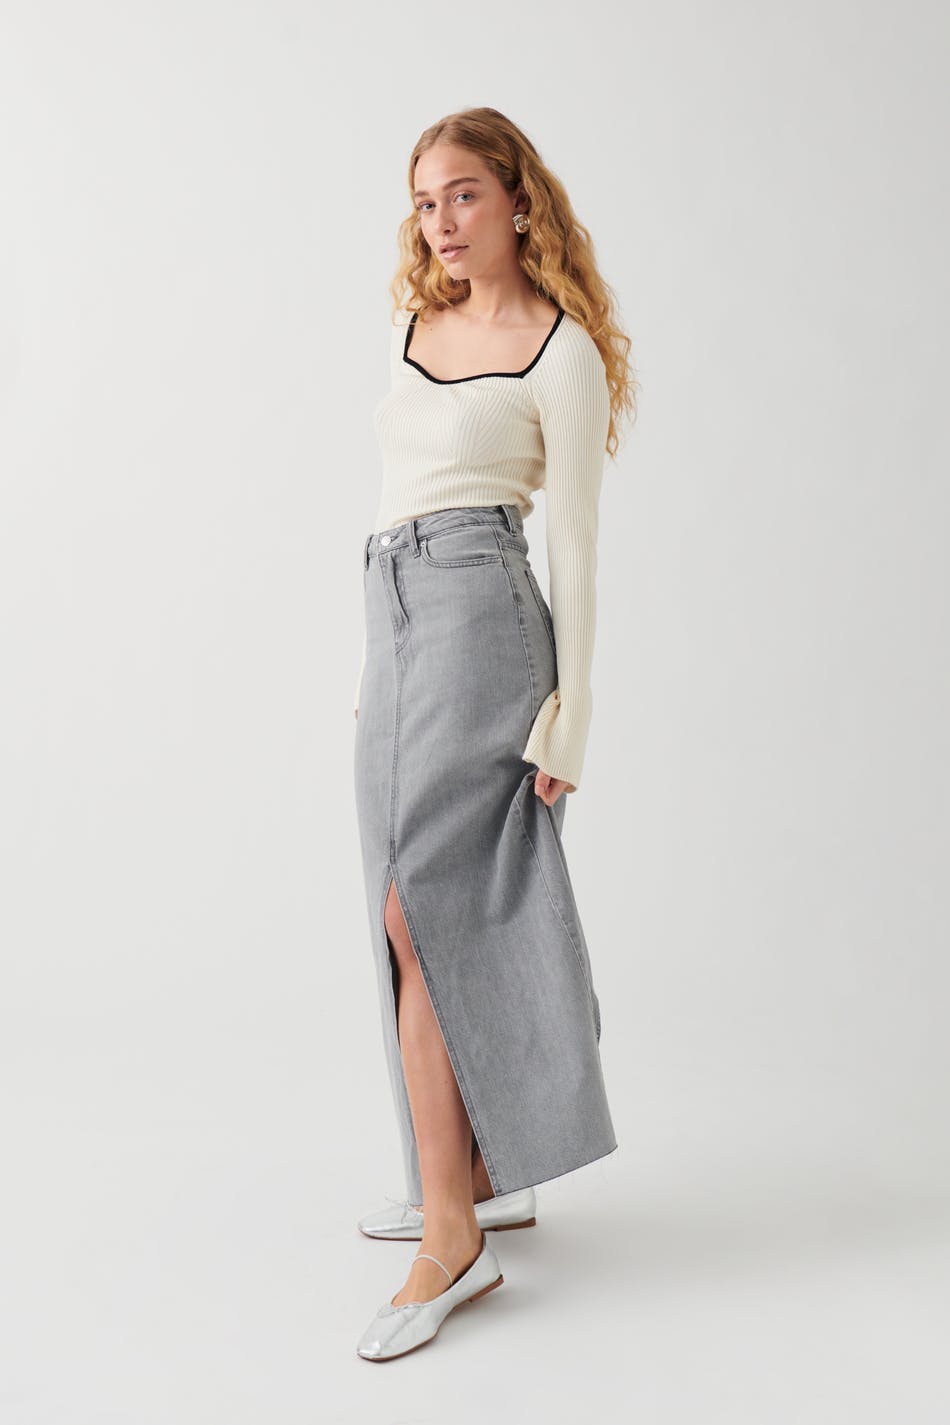 Leah' Denim Skirt in Light Grey FINAL SALE | Modest denim skirts, Feminine  skirt, Denim skirt outfits